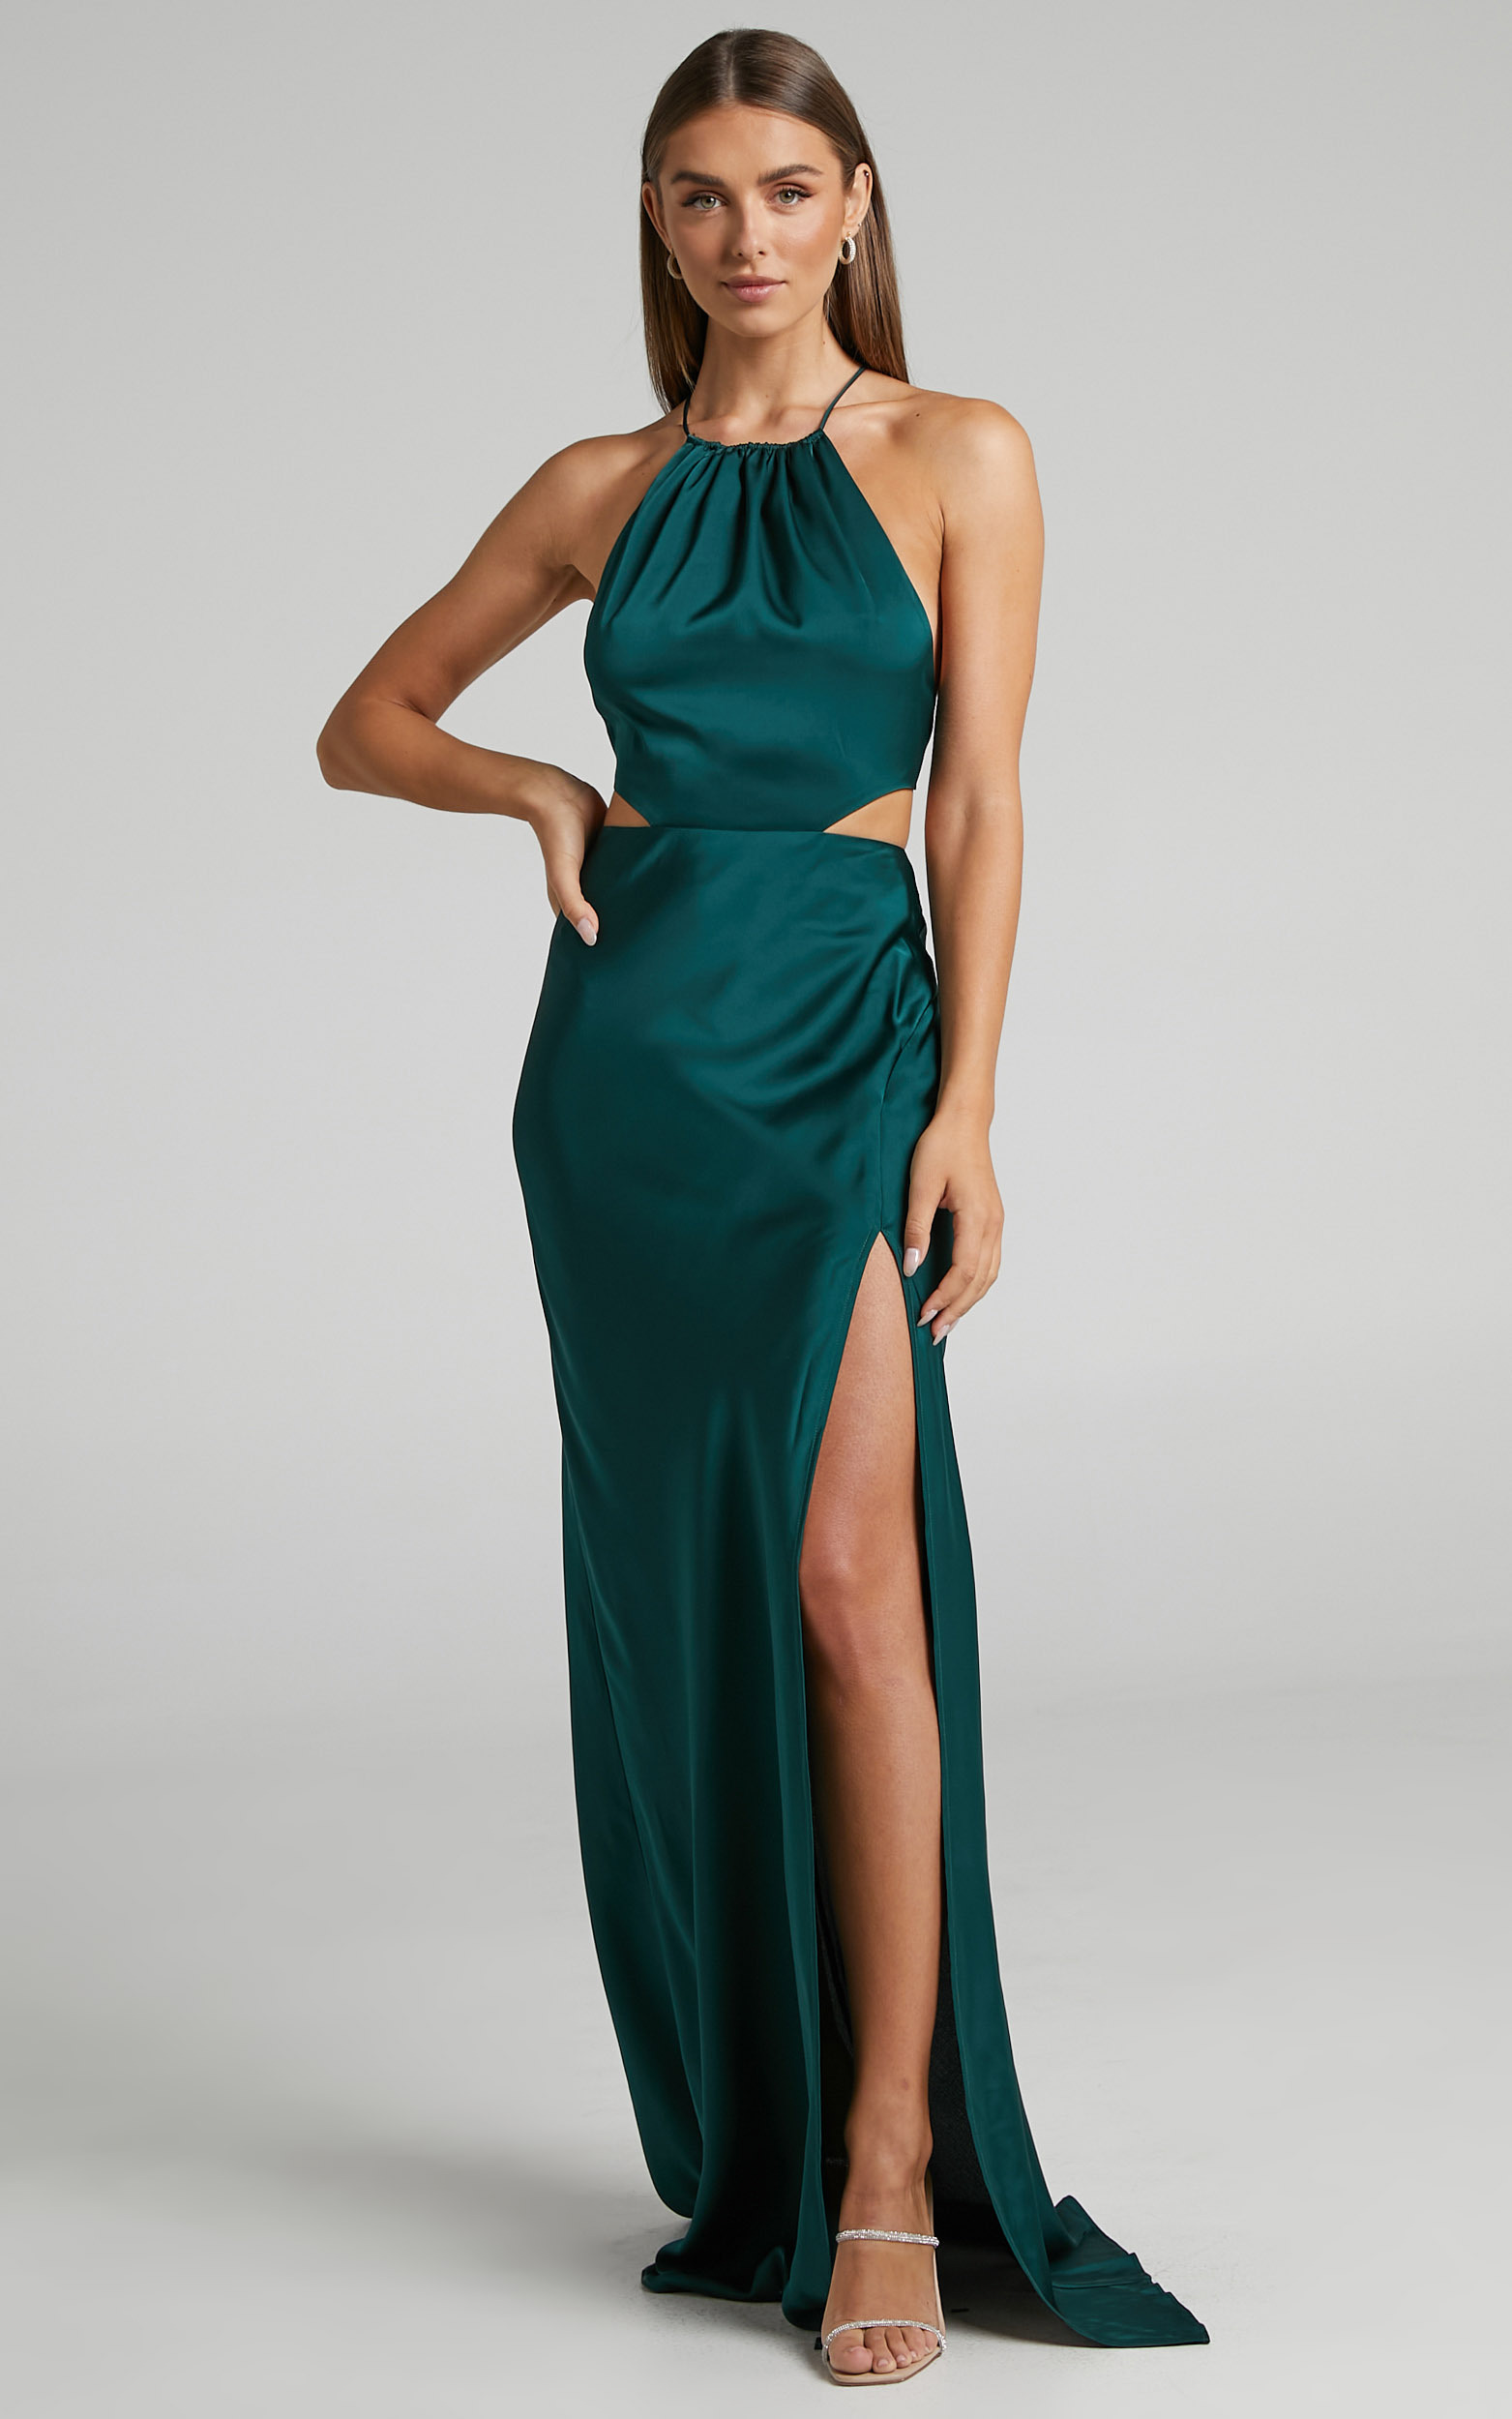 Azrael Maxi Dress - Thigh Split High Neck Tie Back Satin Dress in Emerald - 04, GRN2, hi-res image number null